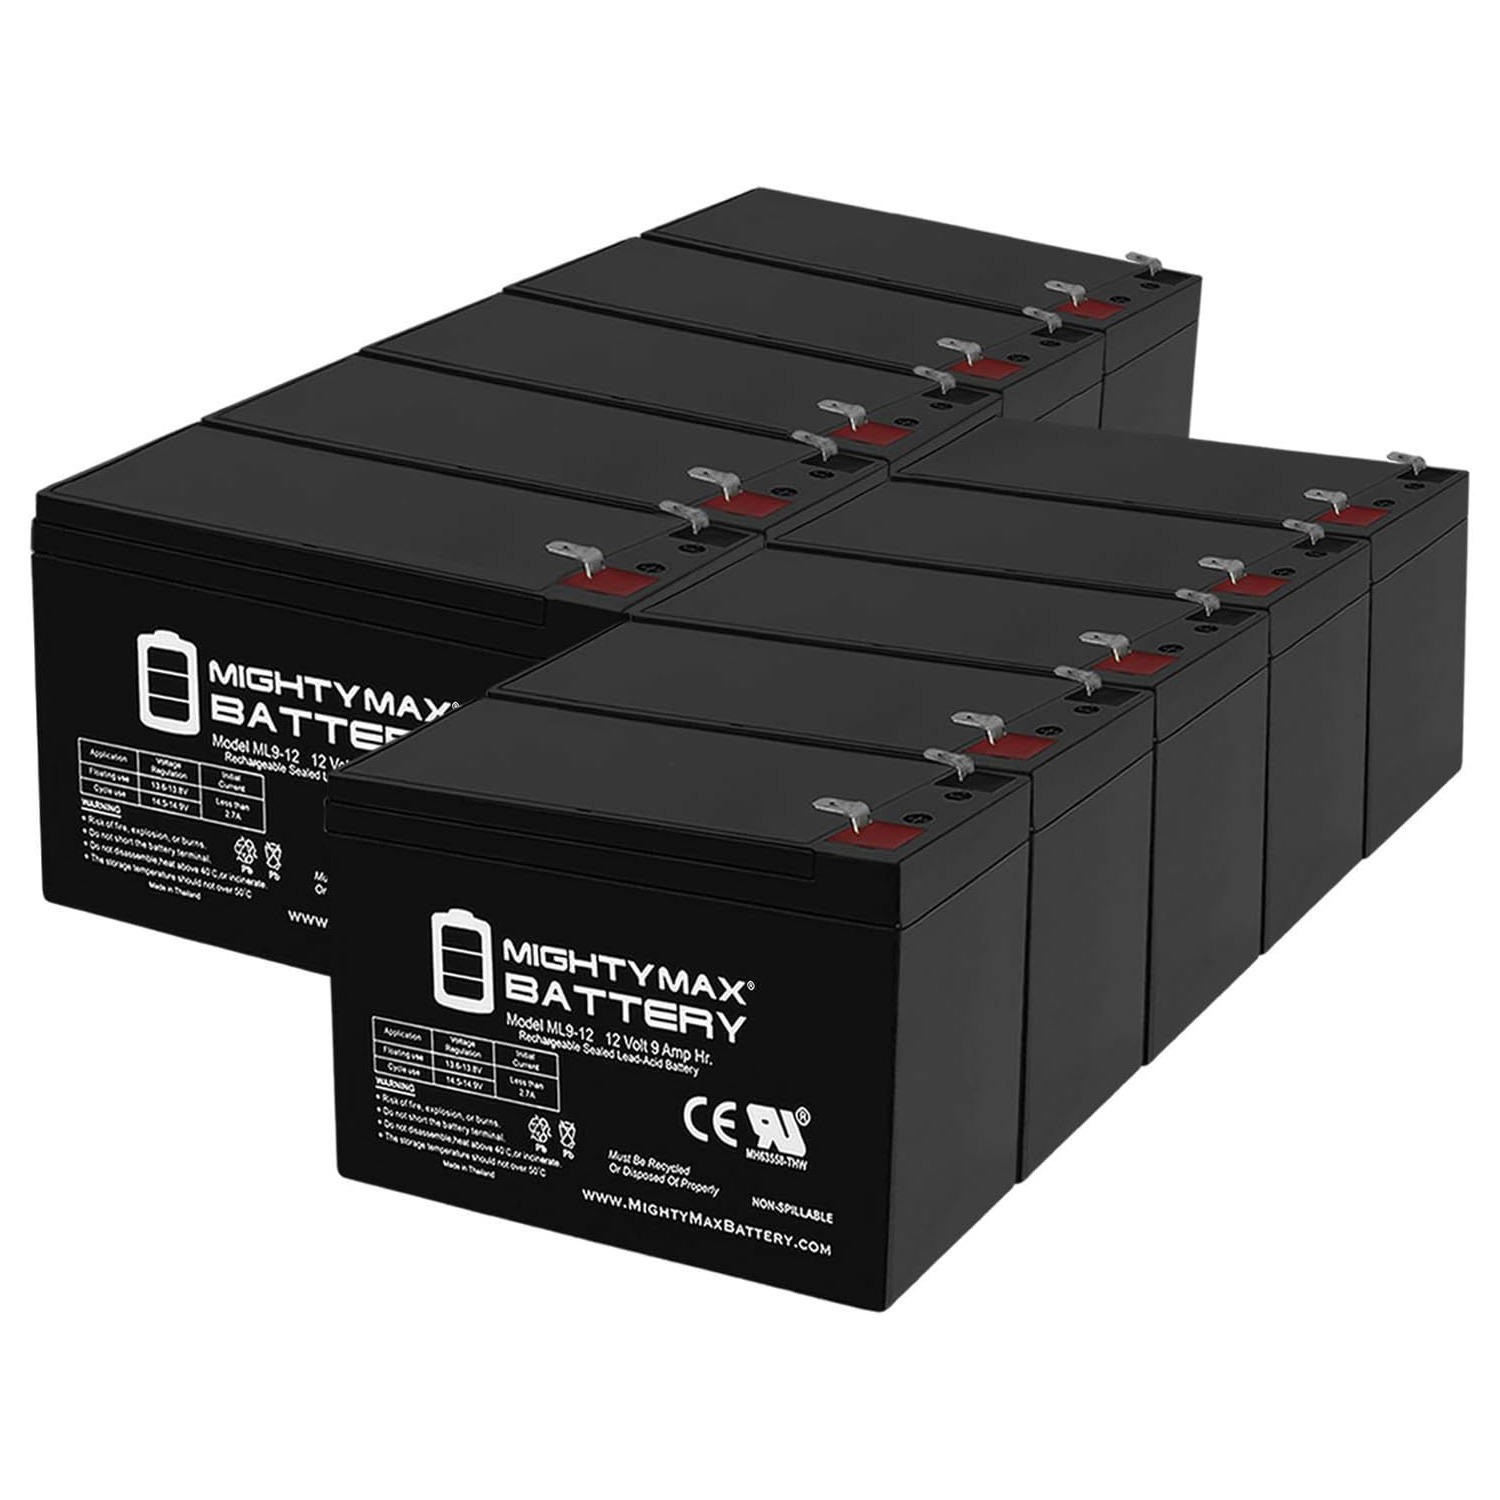 Altronix SMP7PMP8 12V, 9Ah Lead Acid Battery - 10 Pack